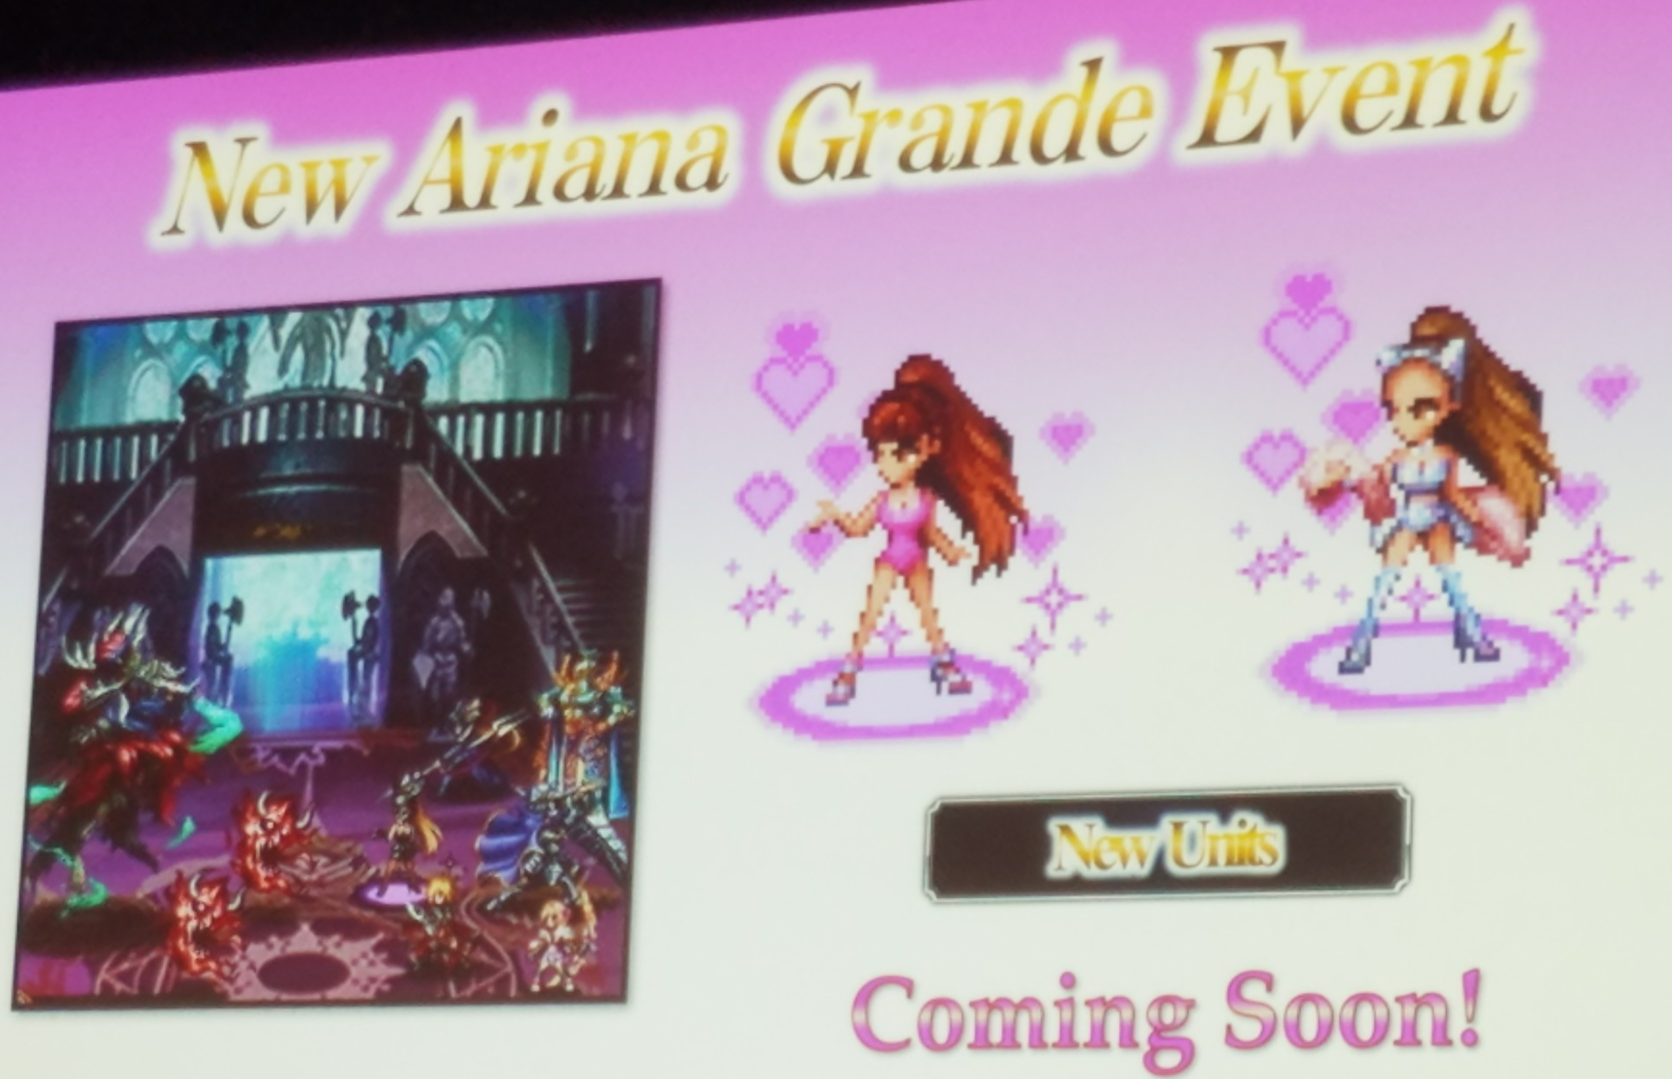 Final Fantasy Brave Exvius - Ariana Grande